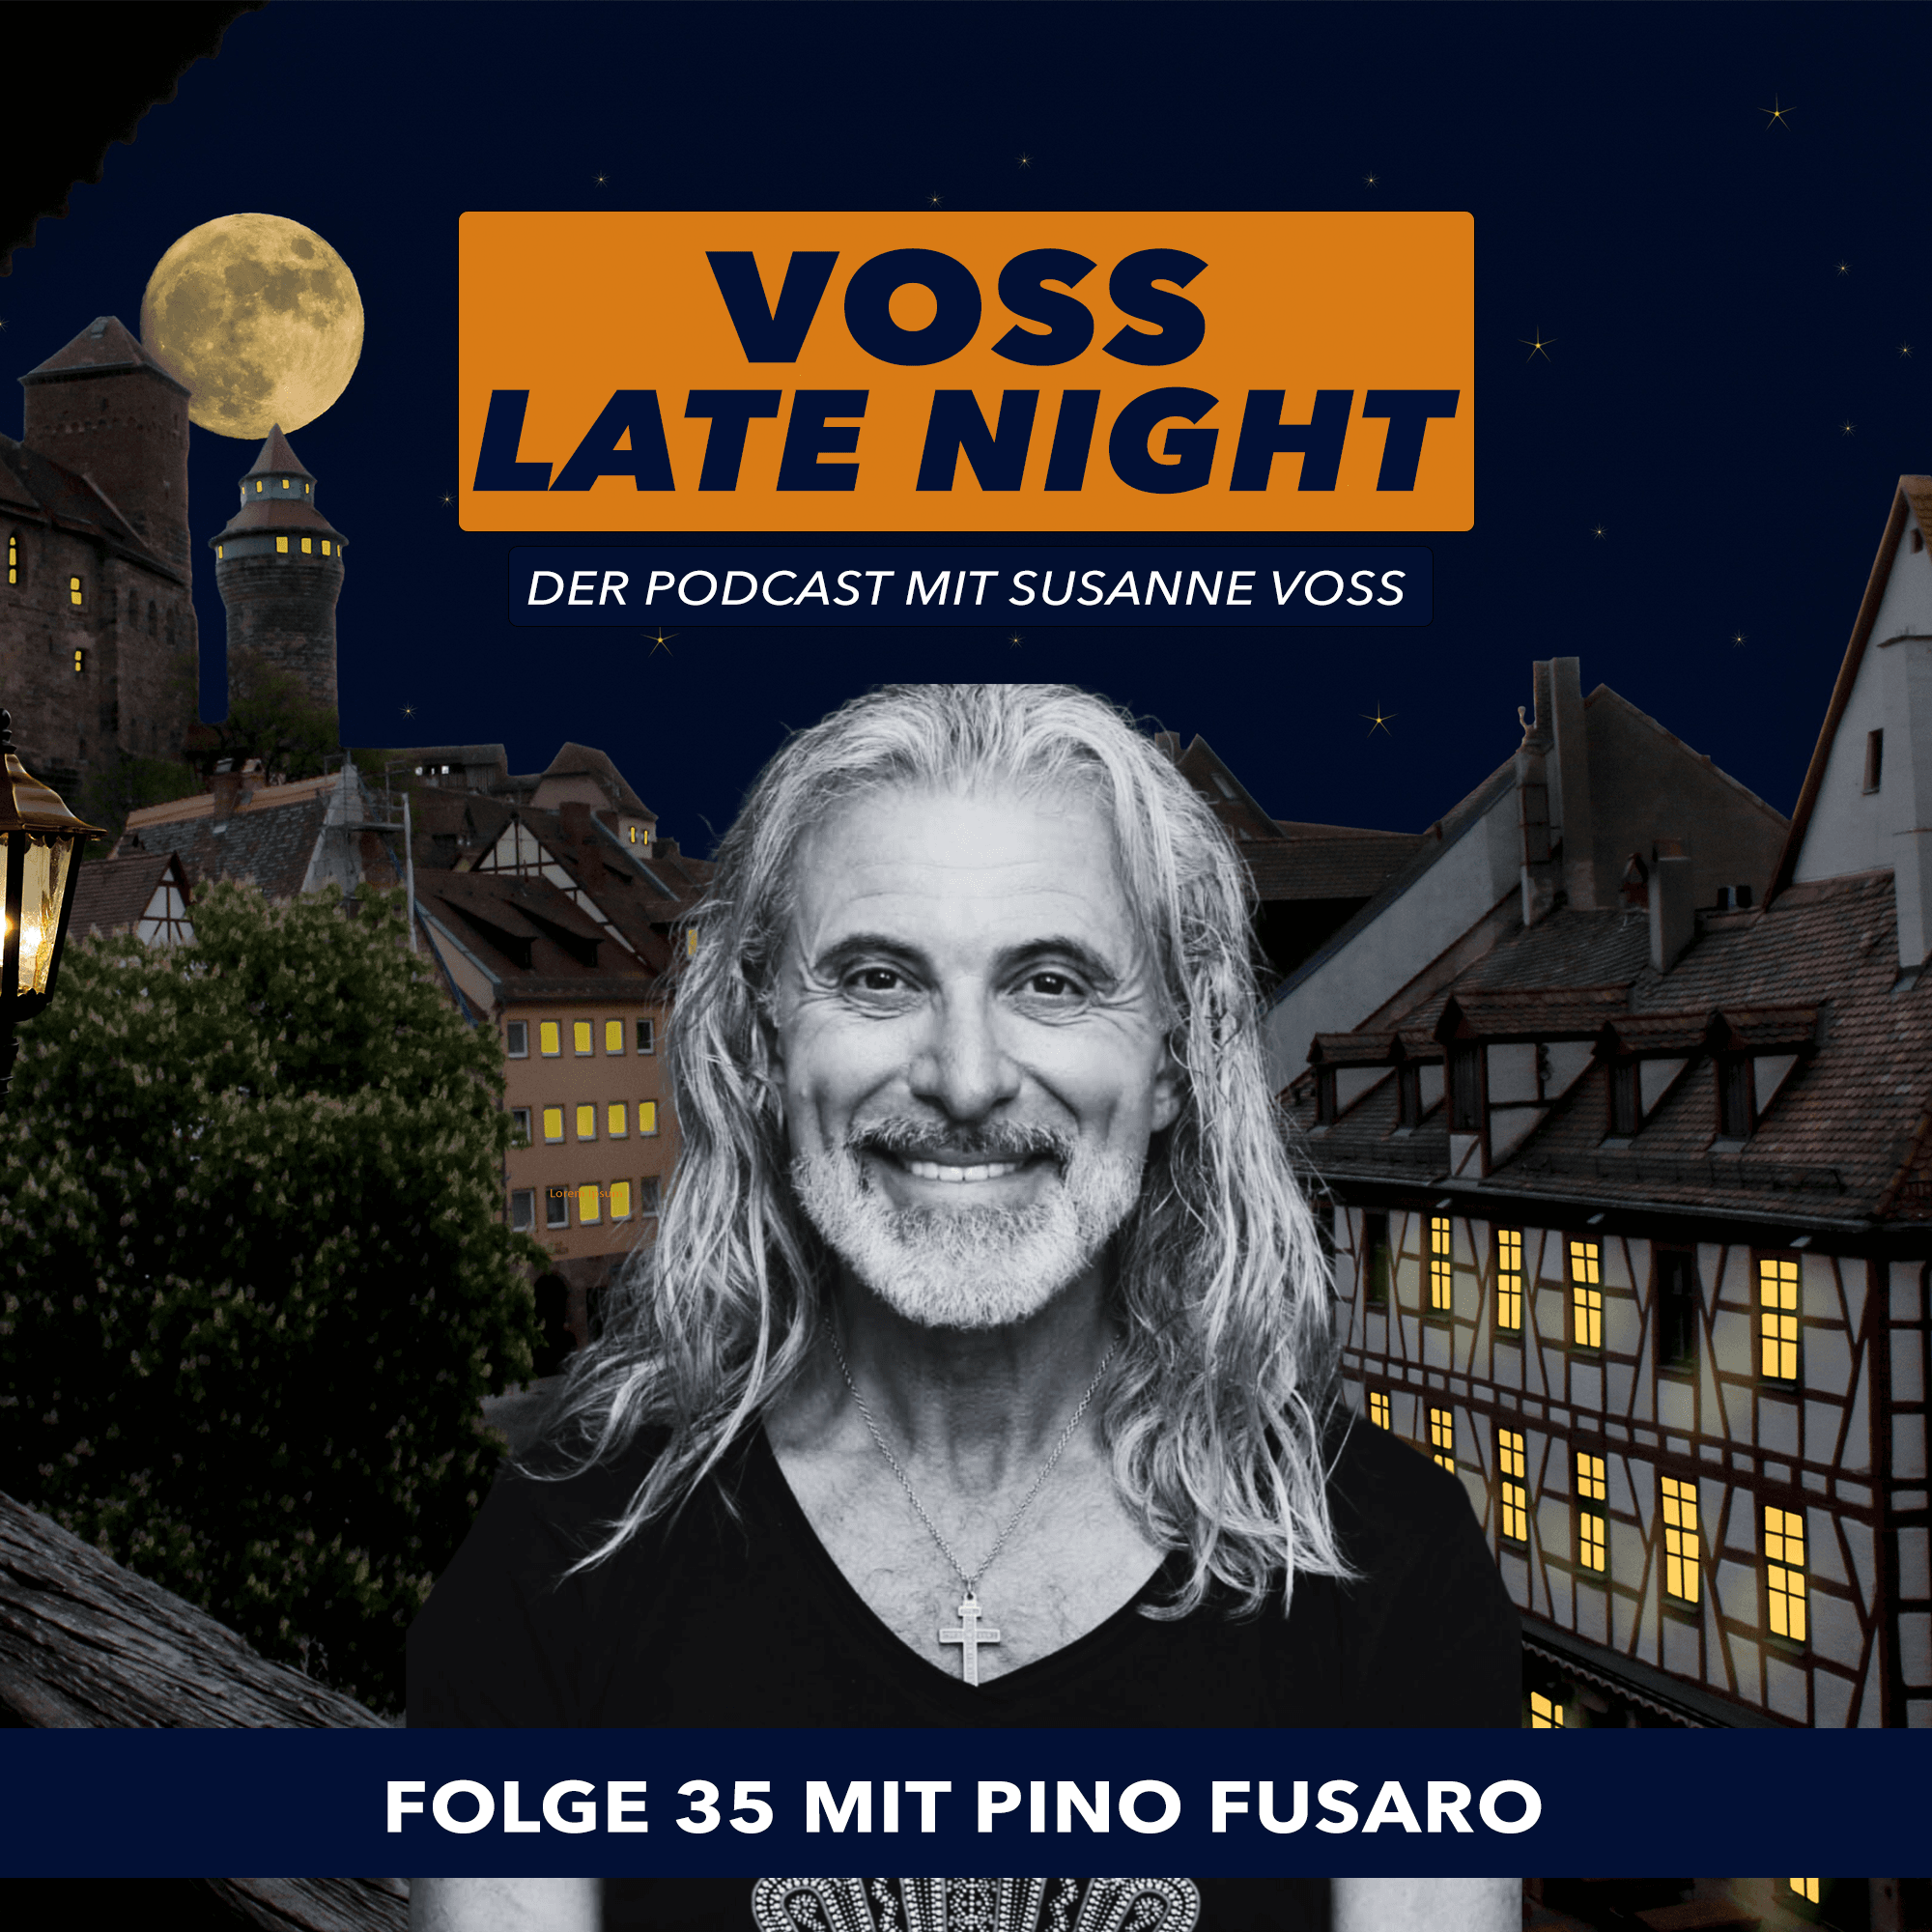 VOSS LATE NIGHT – Folge 35 mit Pino Fusaro